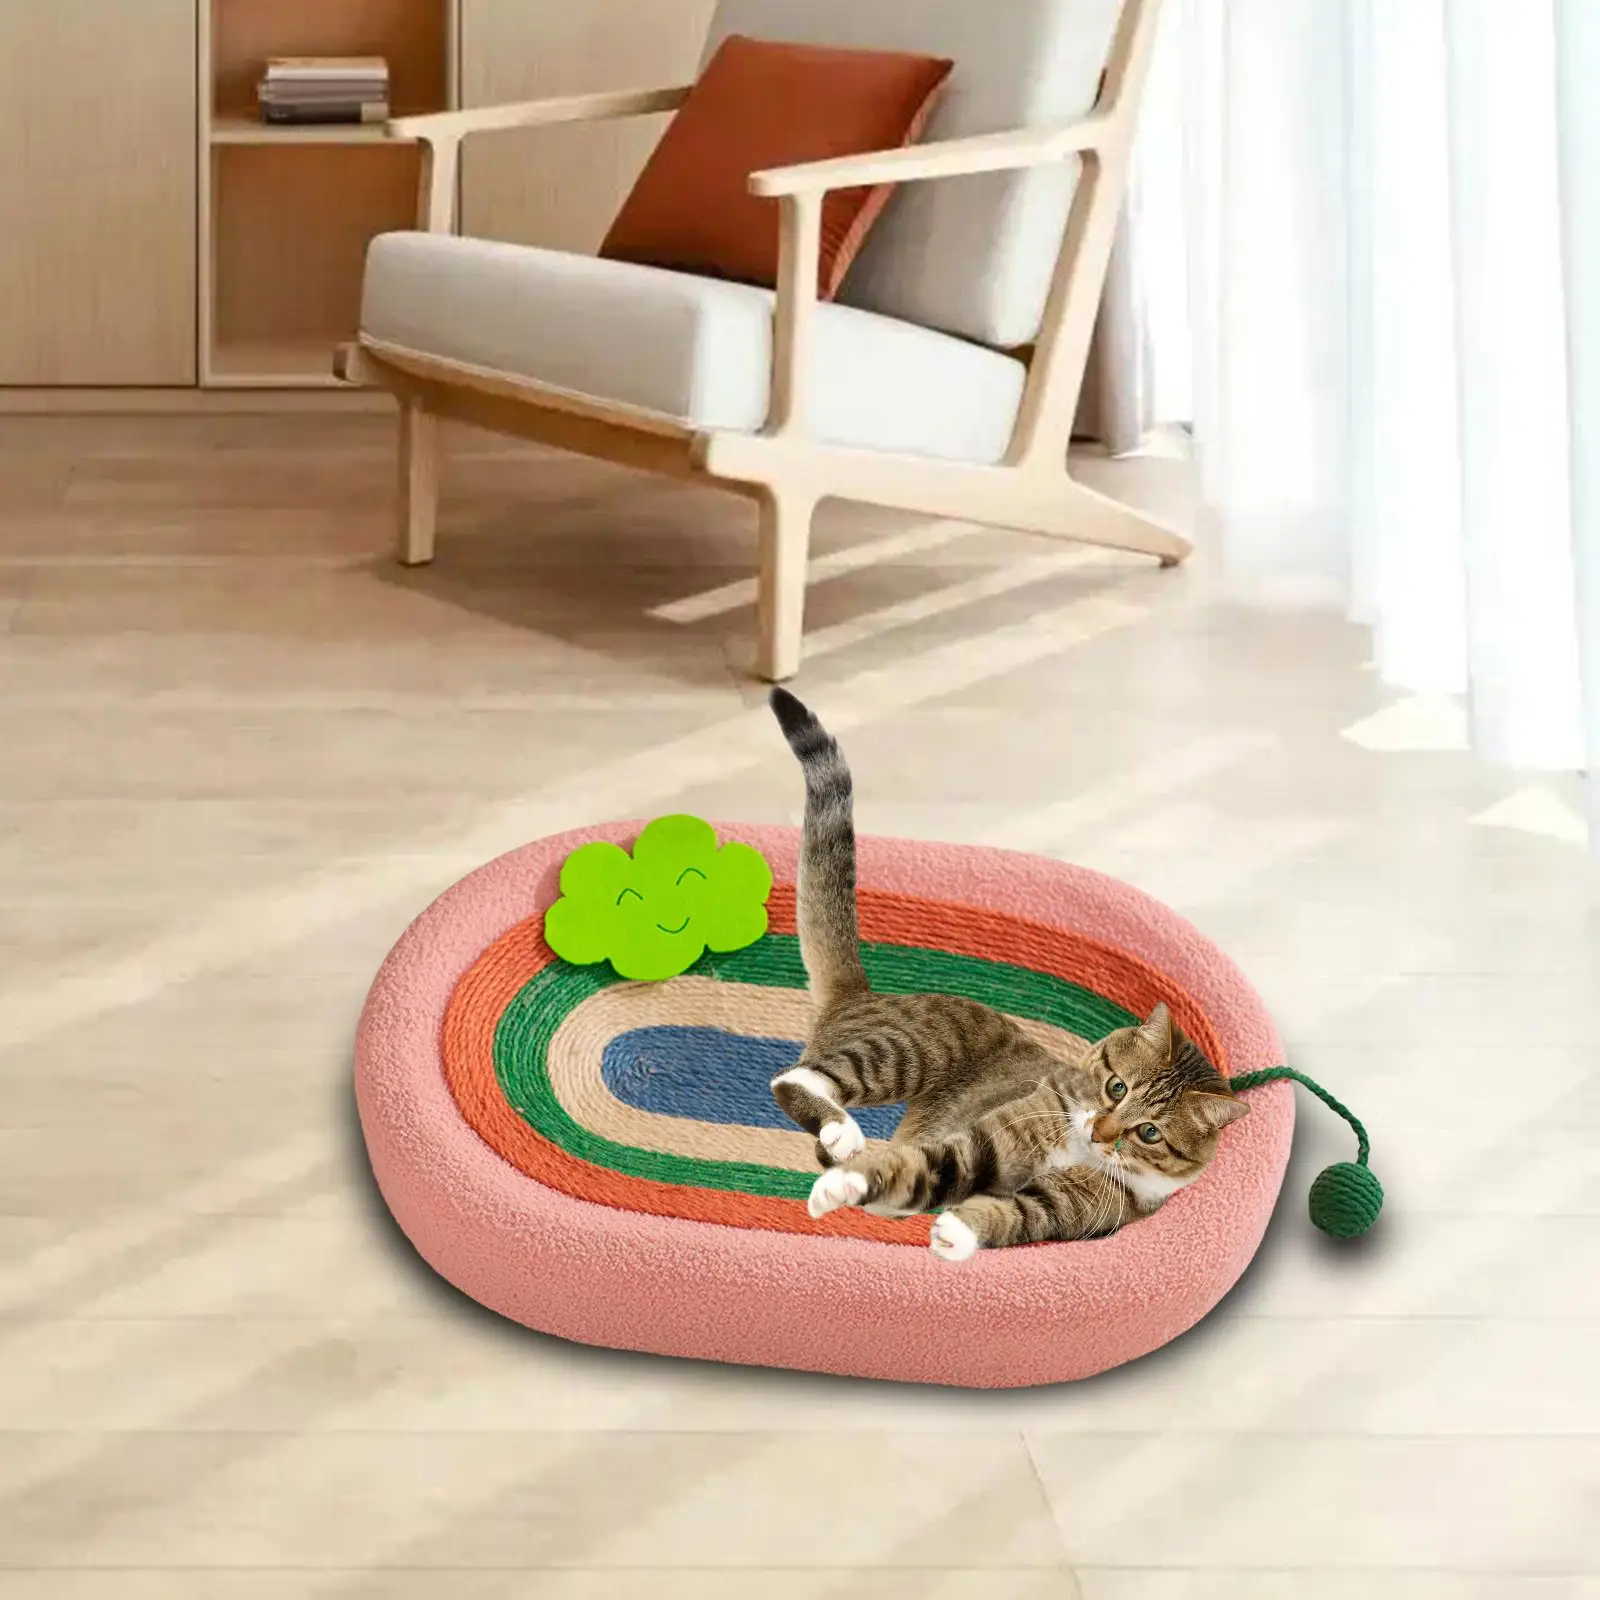 Cat Scratcher Board Prevents Furniture Damage Cute Large Cat Scratch Pad Nest Cat Scratcher Bowl for Indoor Furniture Protection